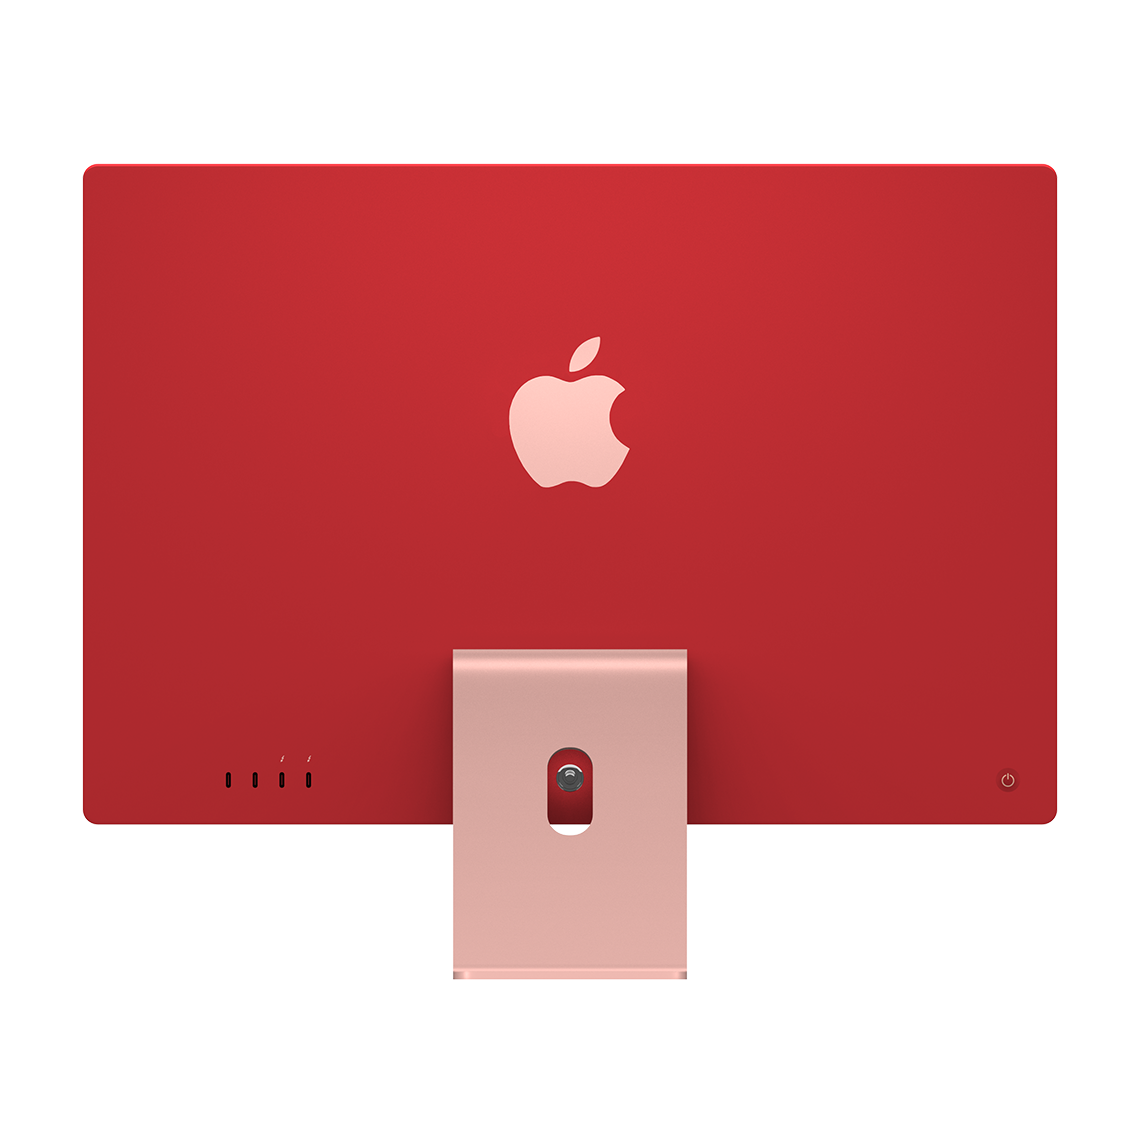 Apple M1 iMac 24-inch - Pink - 8GB RAM, 256GB Flash, 8-Core GPU, 4 Ports, Open Box